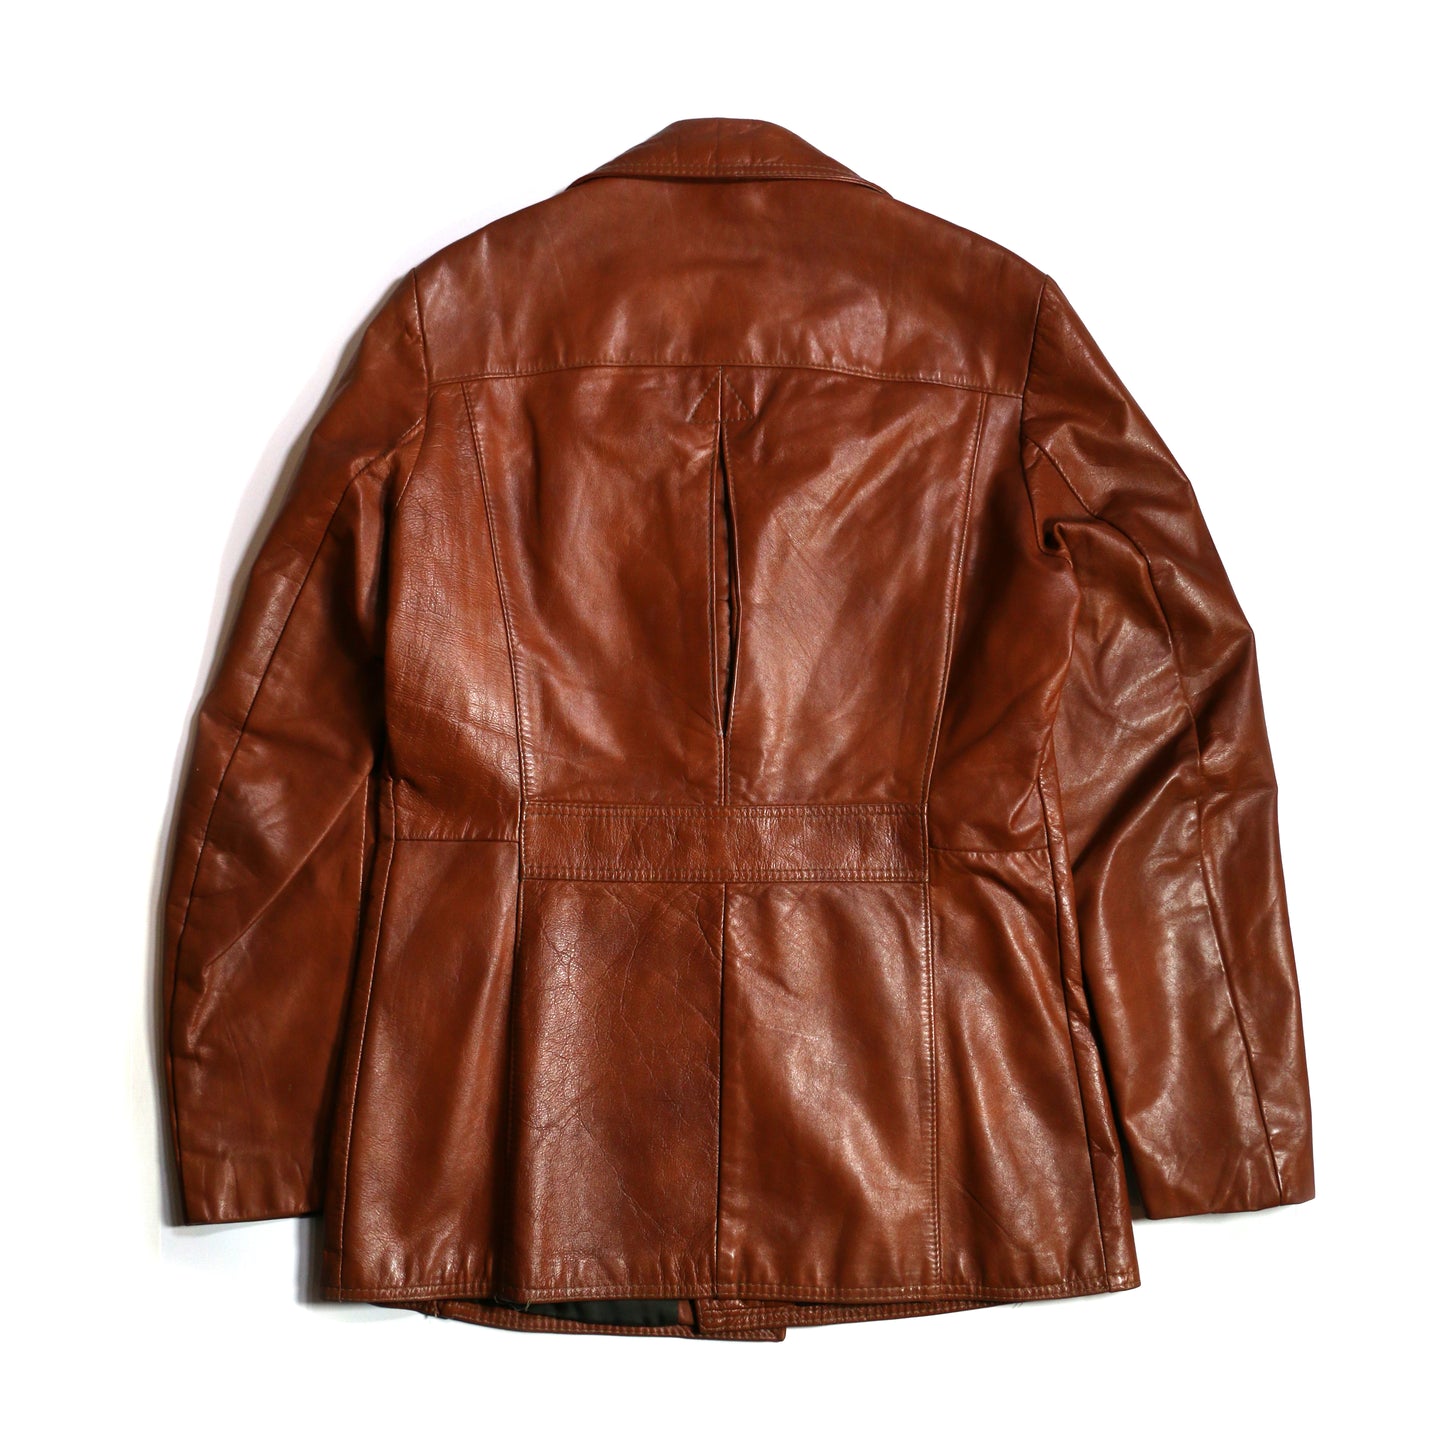 Used OLD Leather Jacket